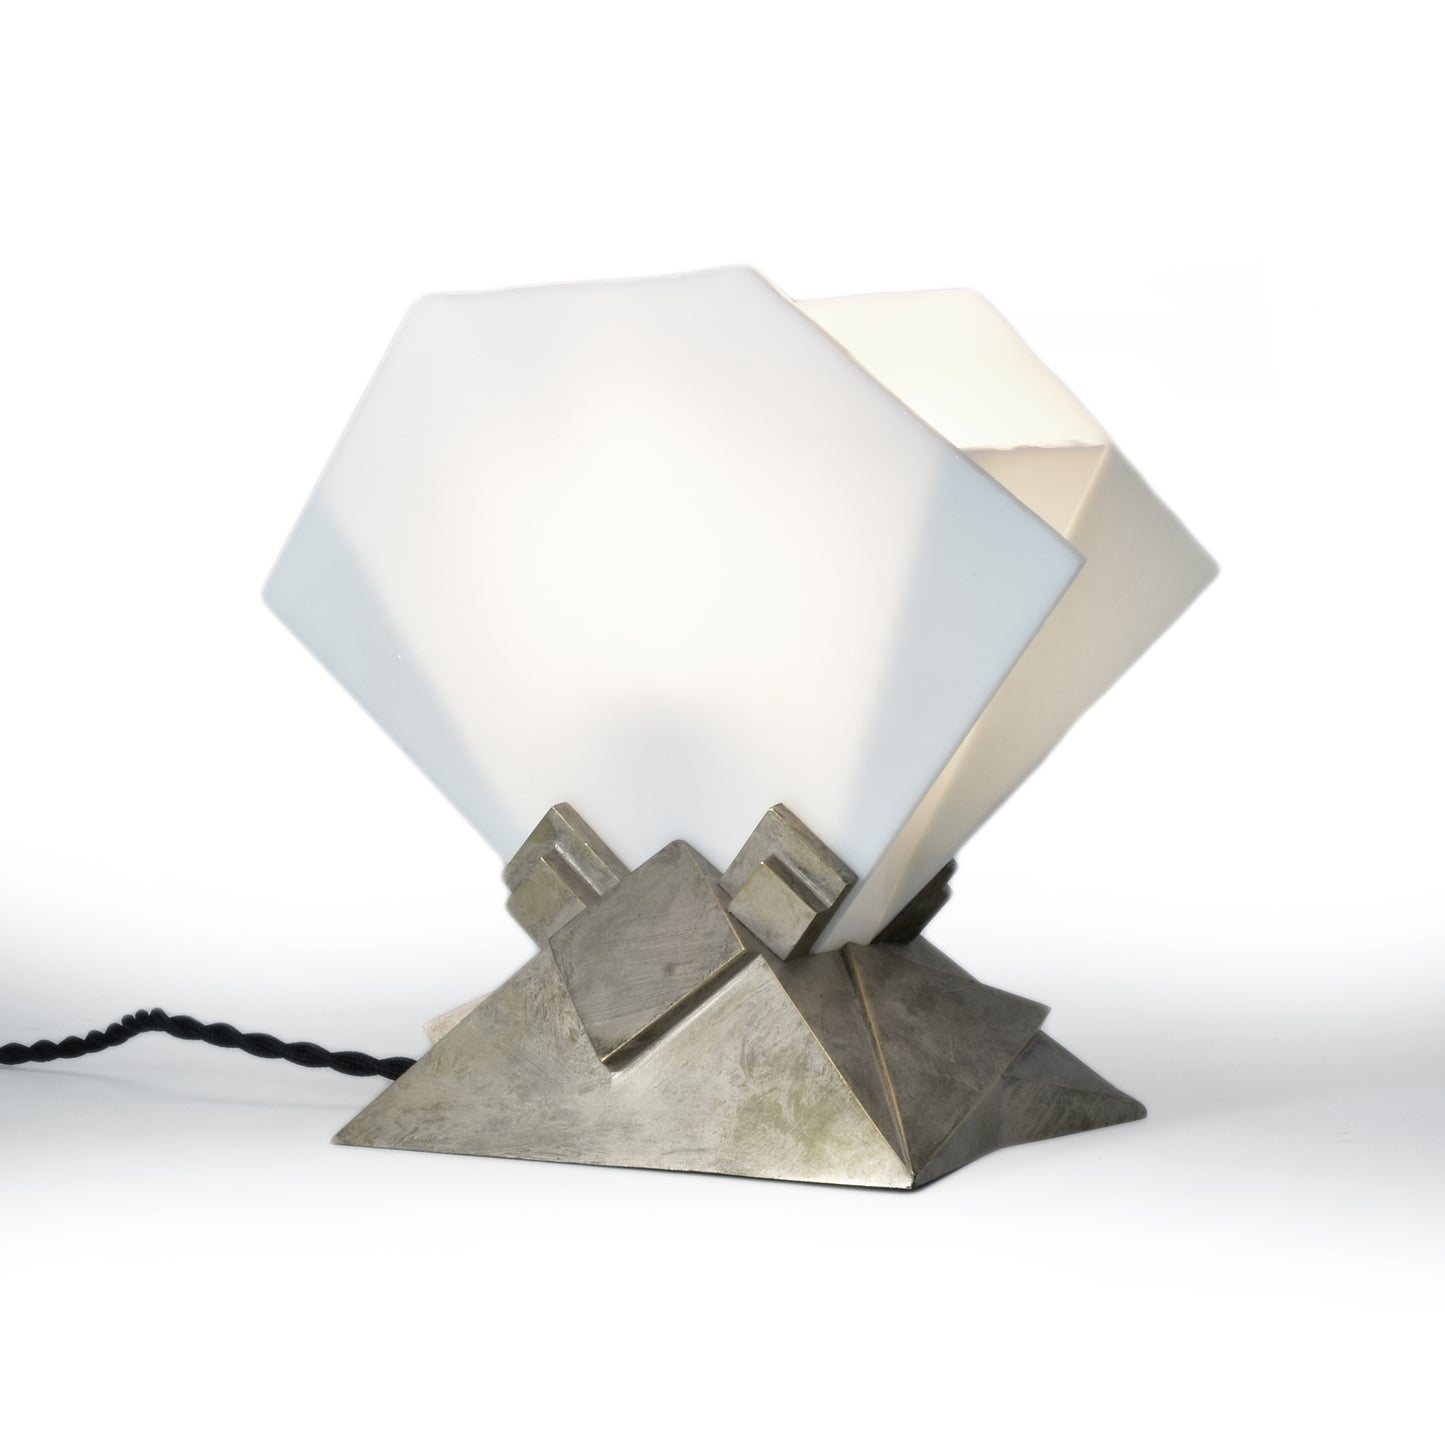 cubist-modernist table lamp